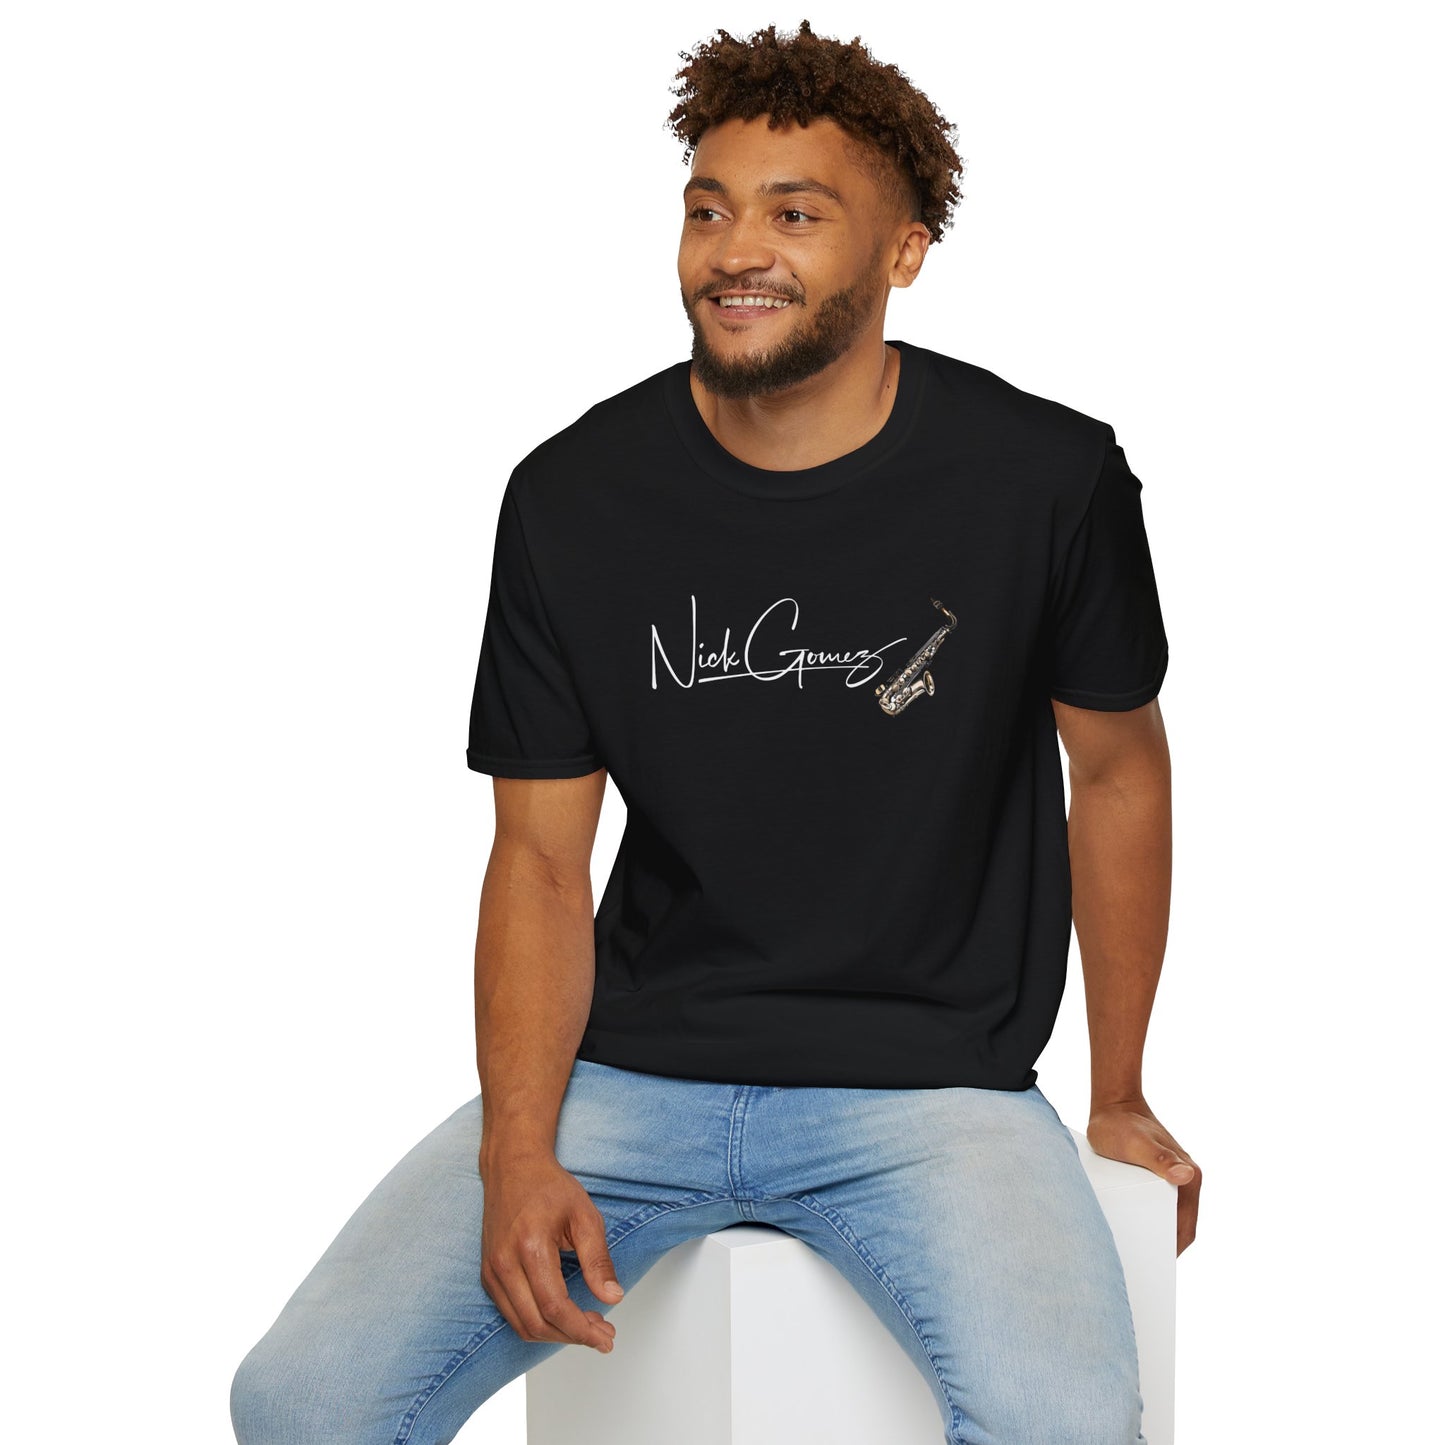 Nick Gomez - The T-Shirt